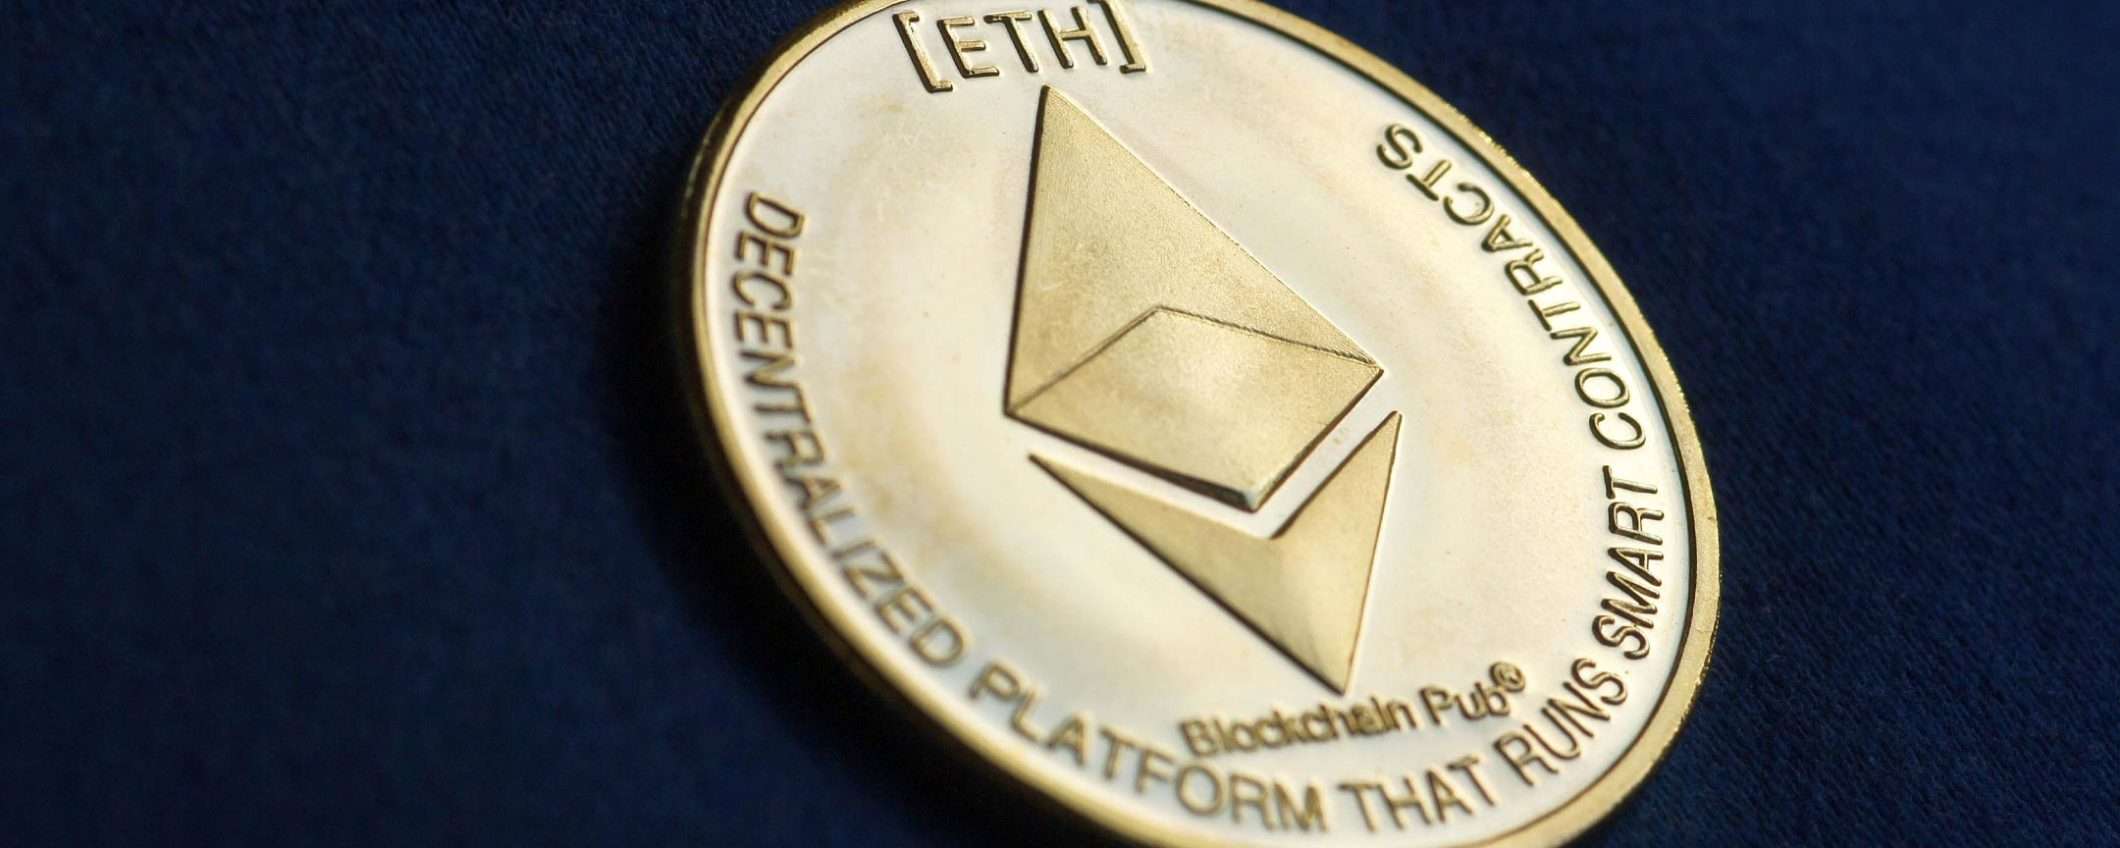 Ethereum, nuovo record: oltre i 4100 dollari